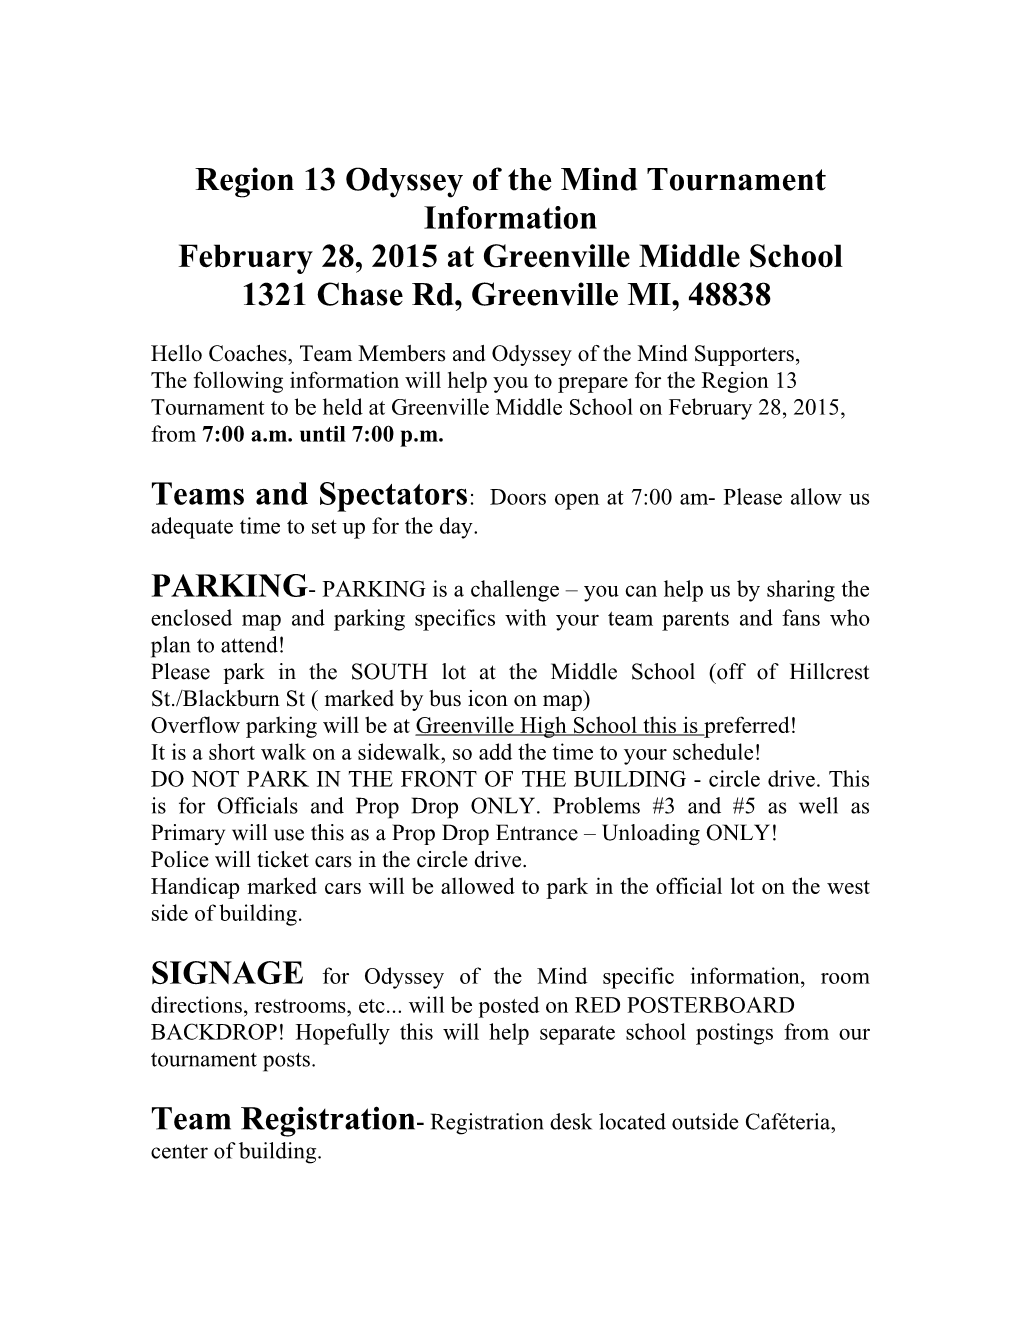 Region 13 Odyssey of the Mind Tournament Information